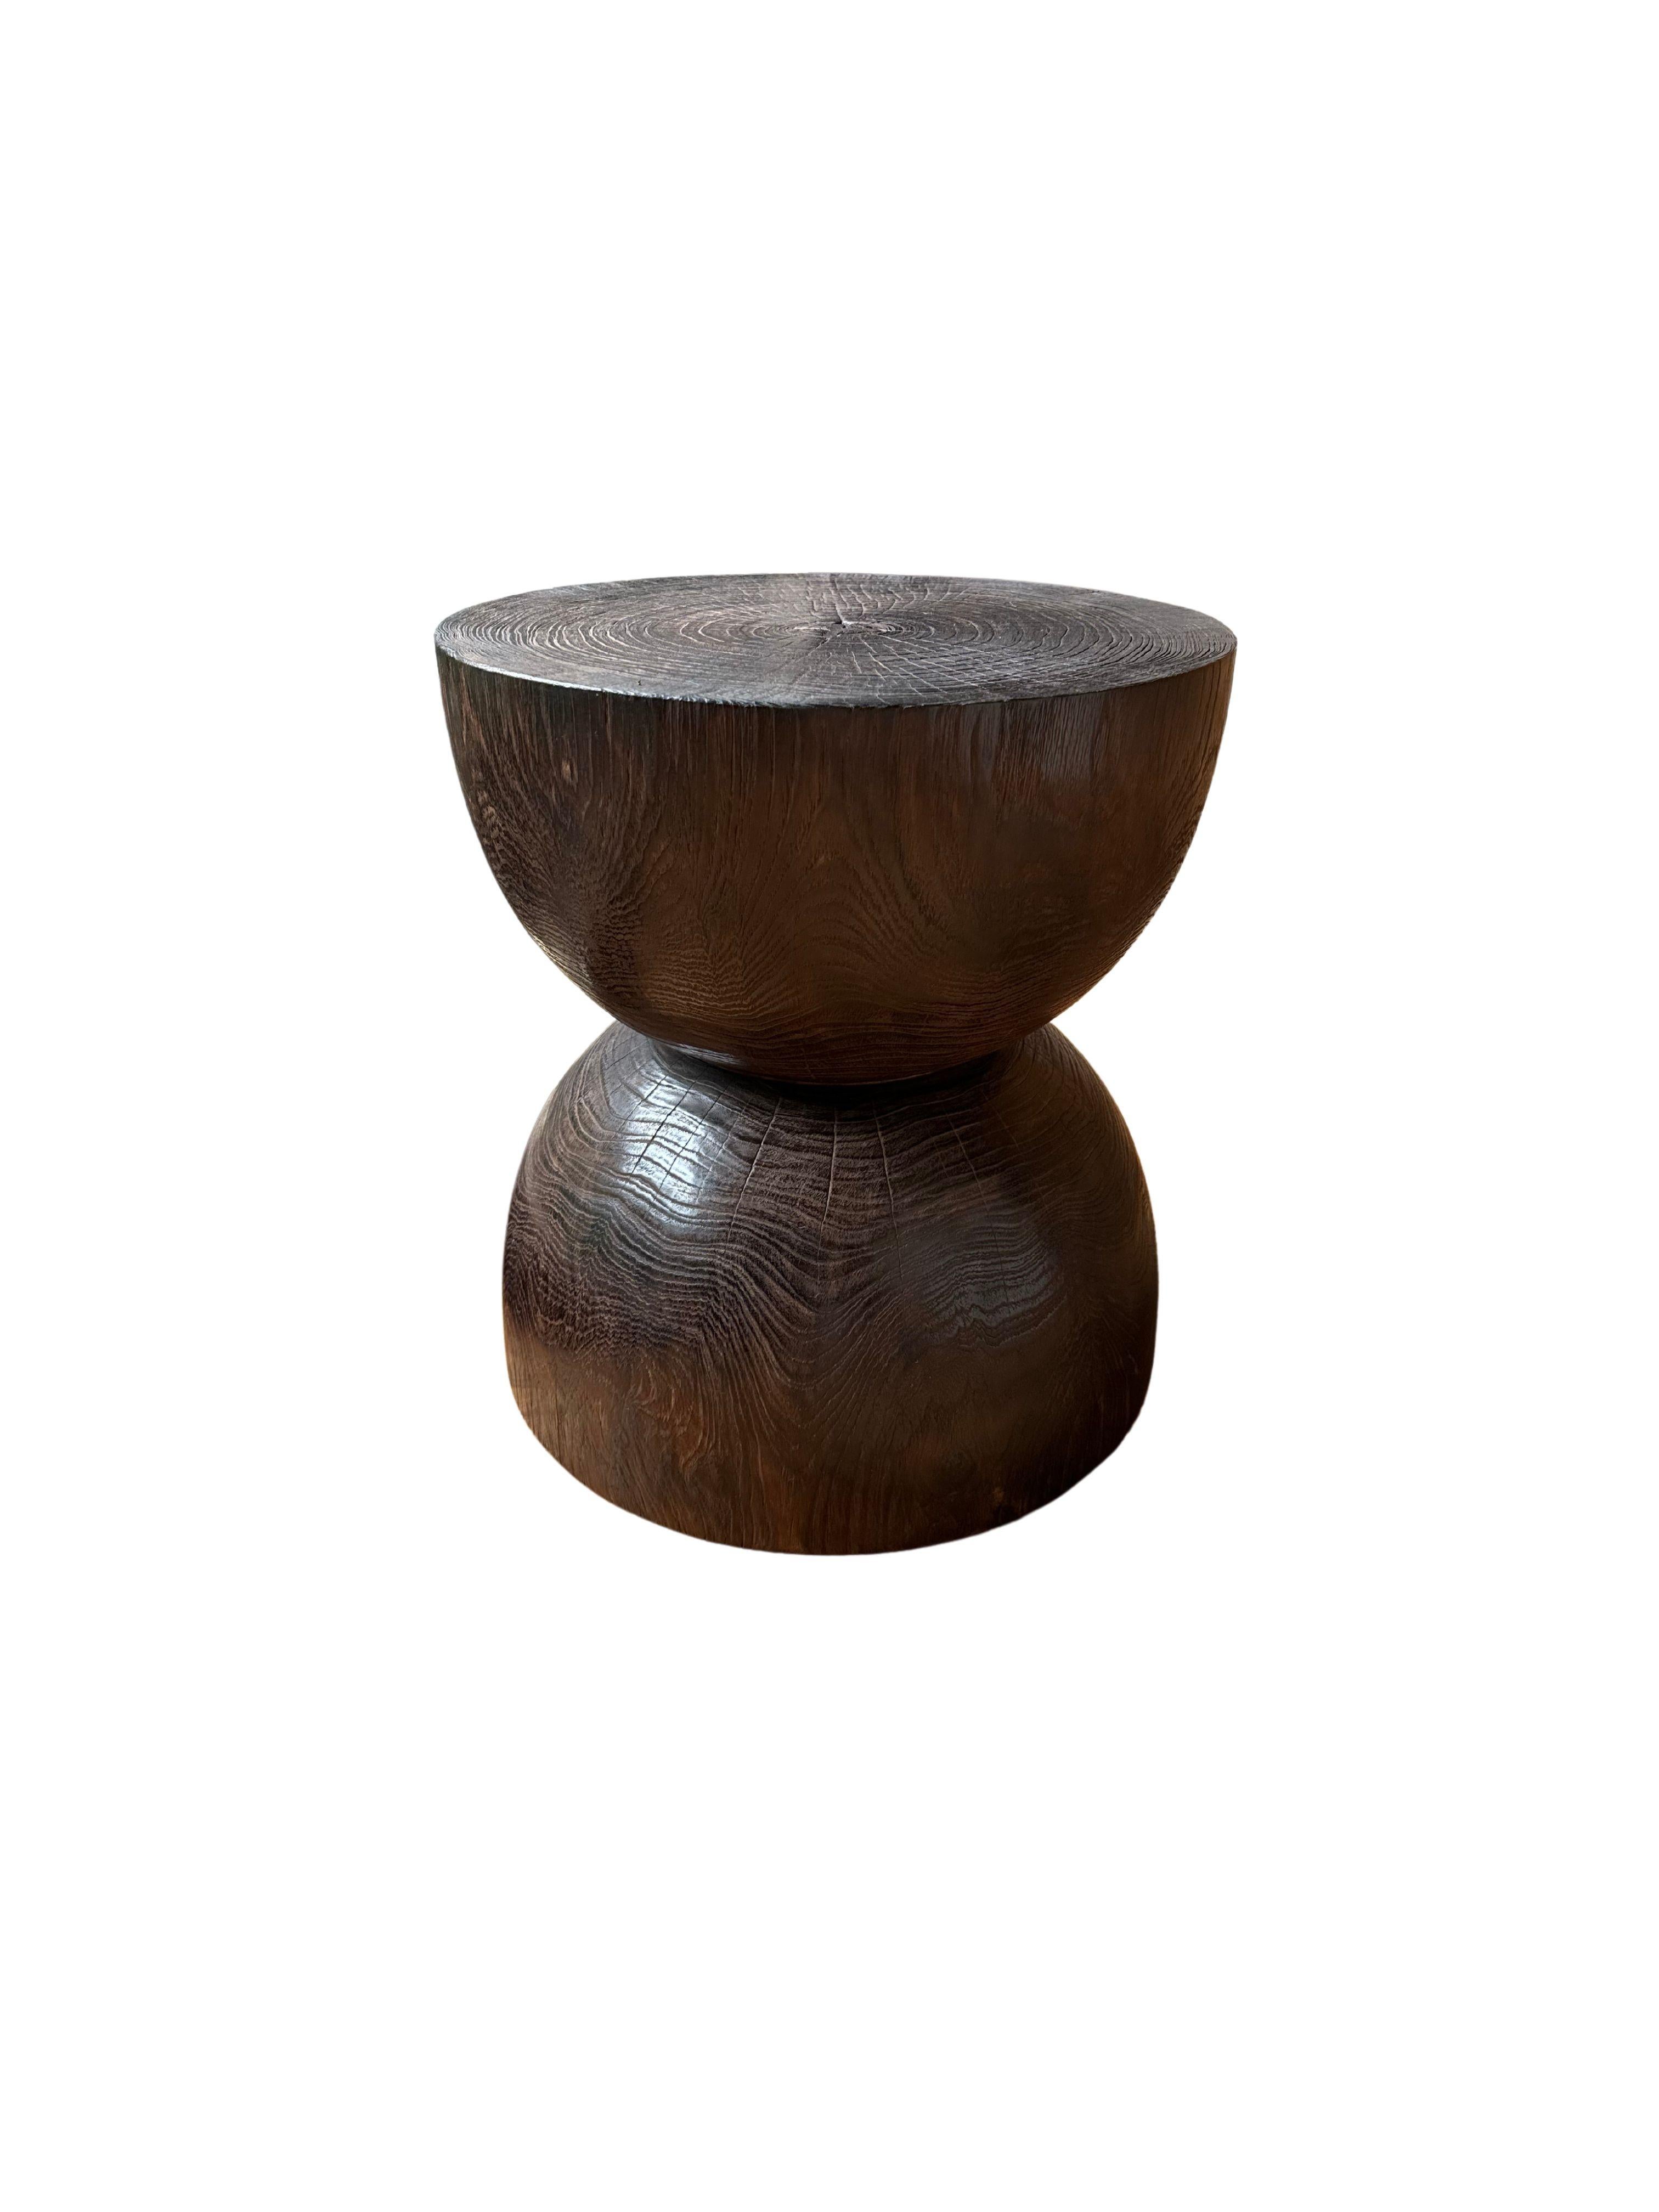 Indonesian Round Teak Wood Side Table, Burnt Finish, Hour Glass Design, Modern Organic For Sale